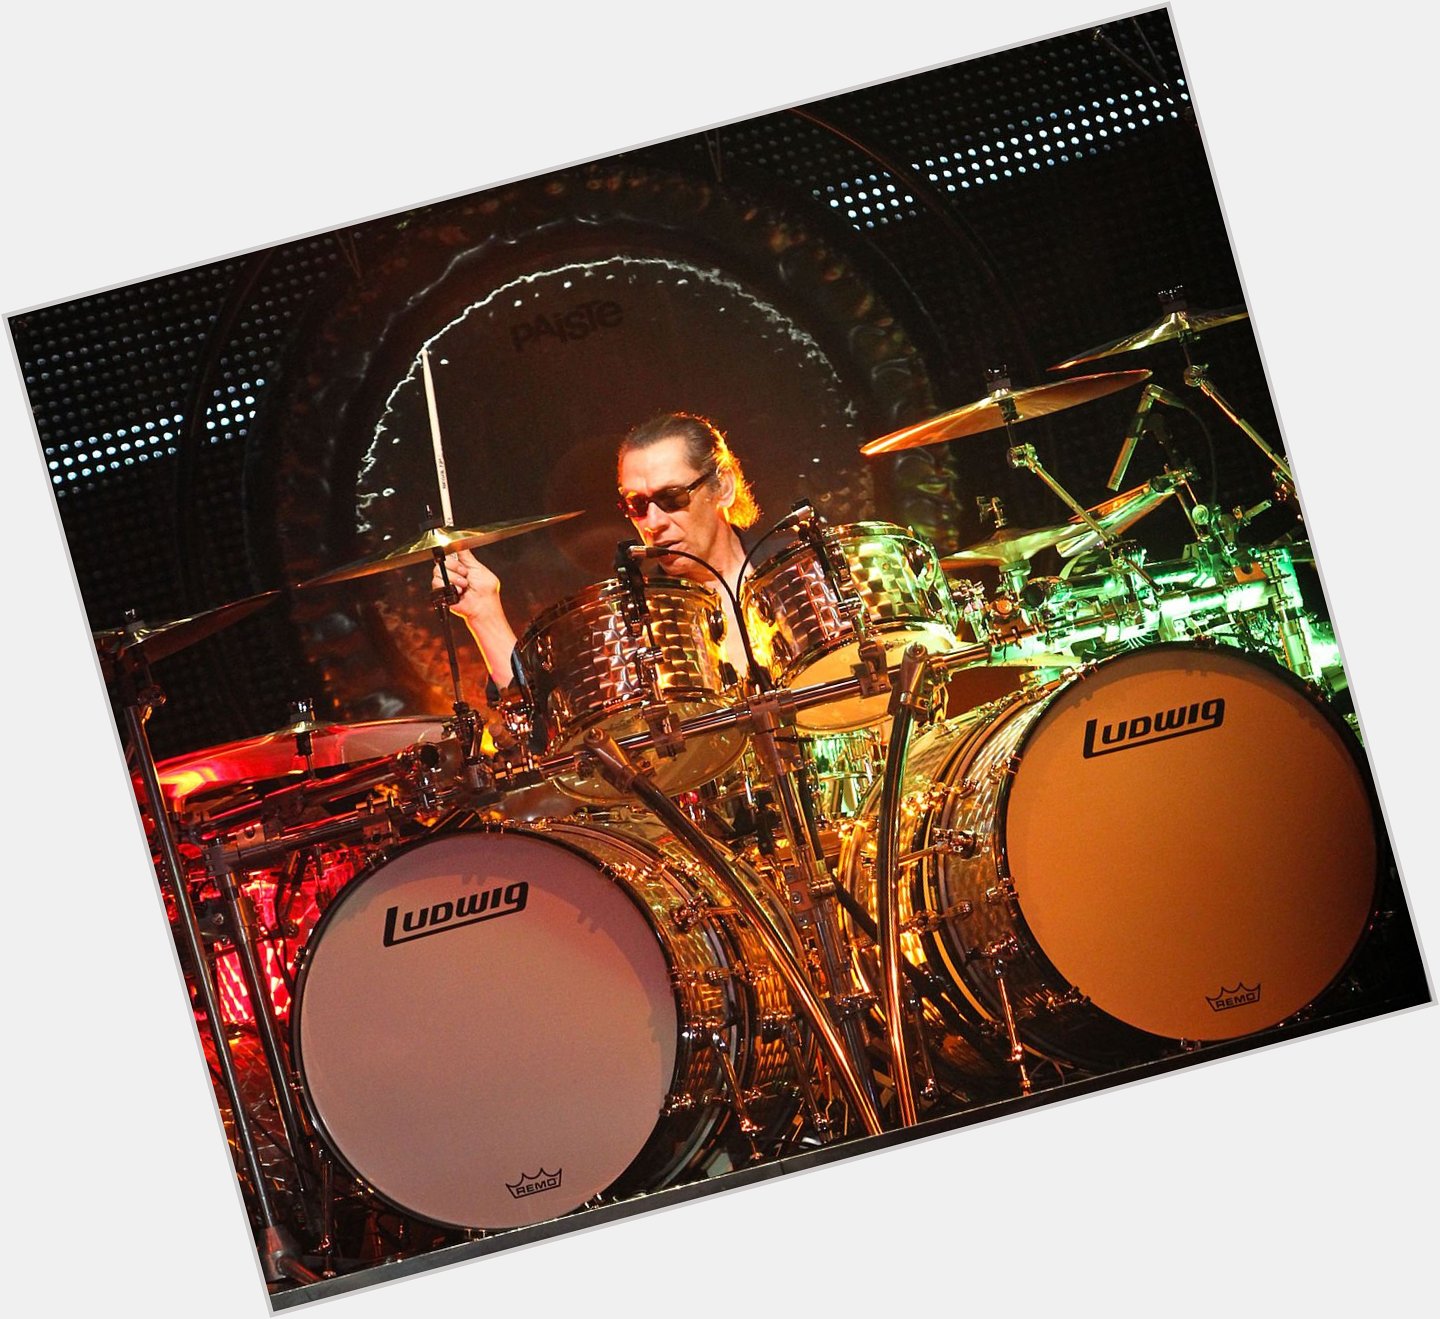 Happy 64th Birthday to Alex Van Halen. Originally, his brother Eddie played drums, while Alex practiced guitar. 